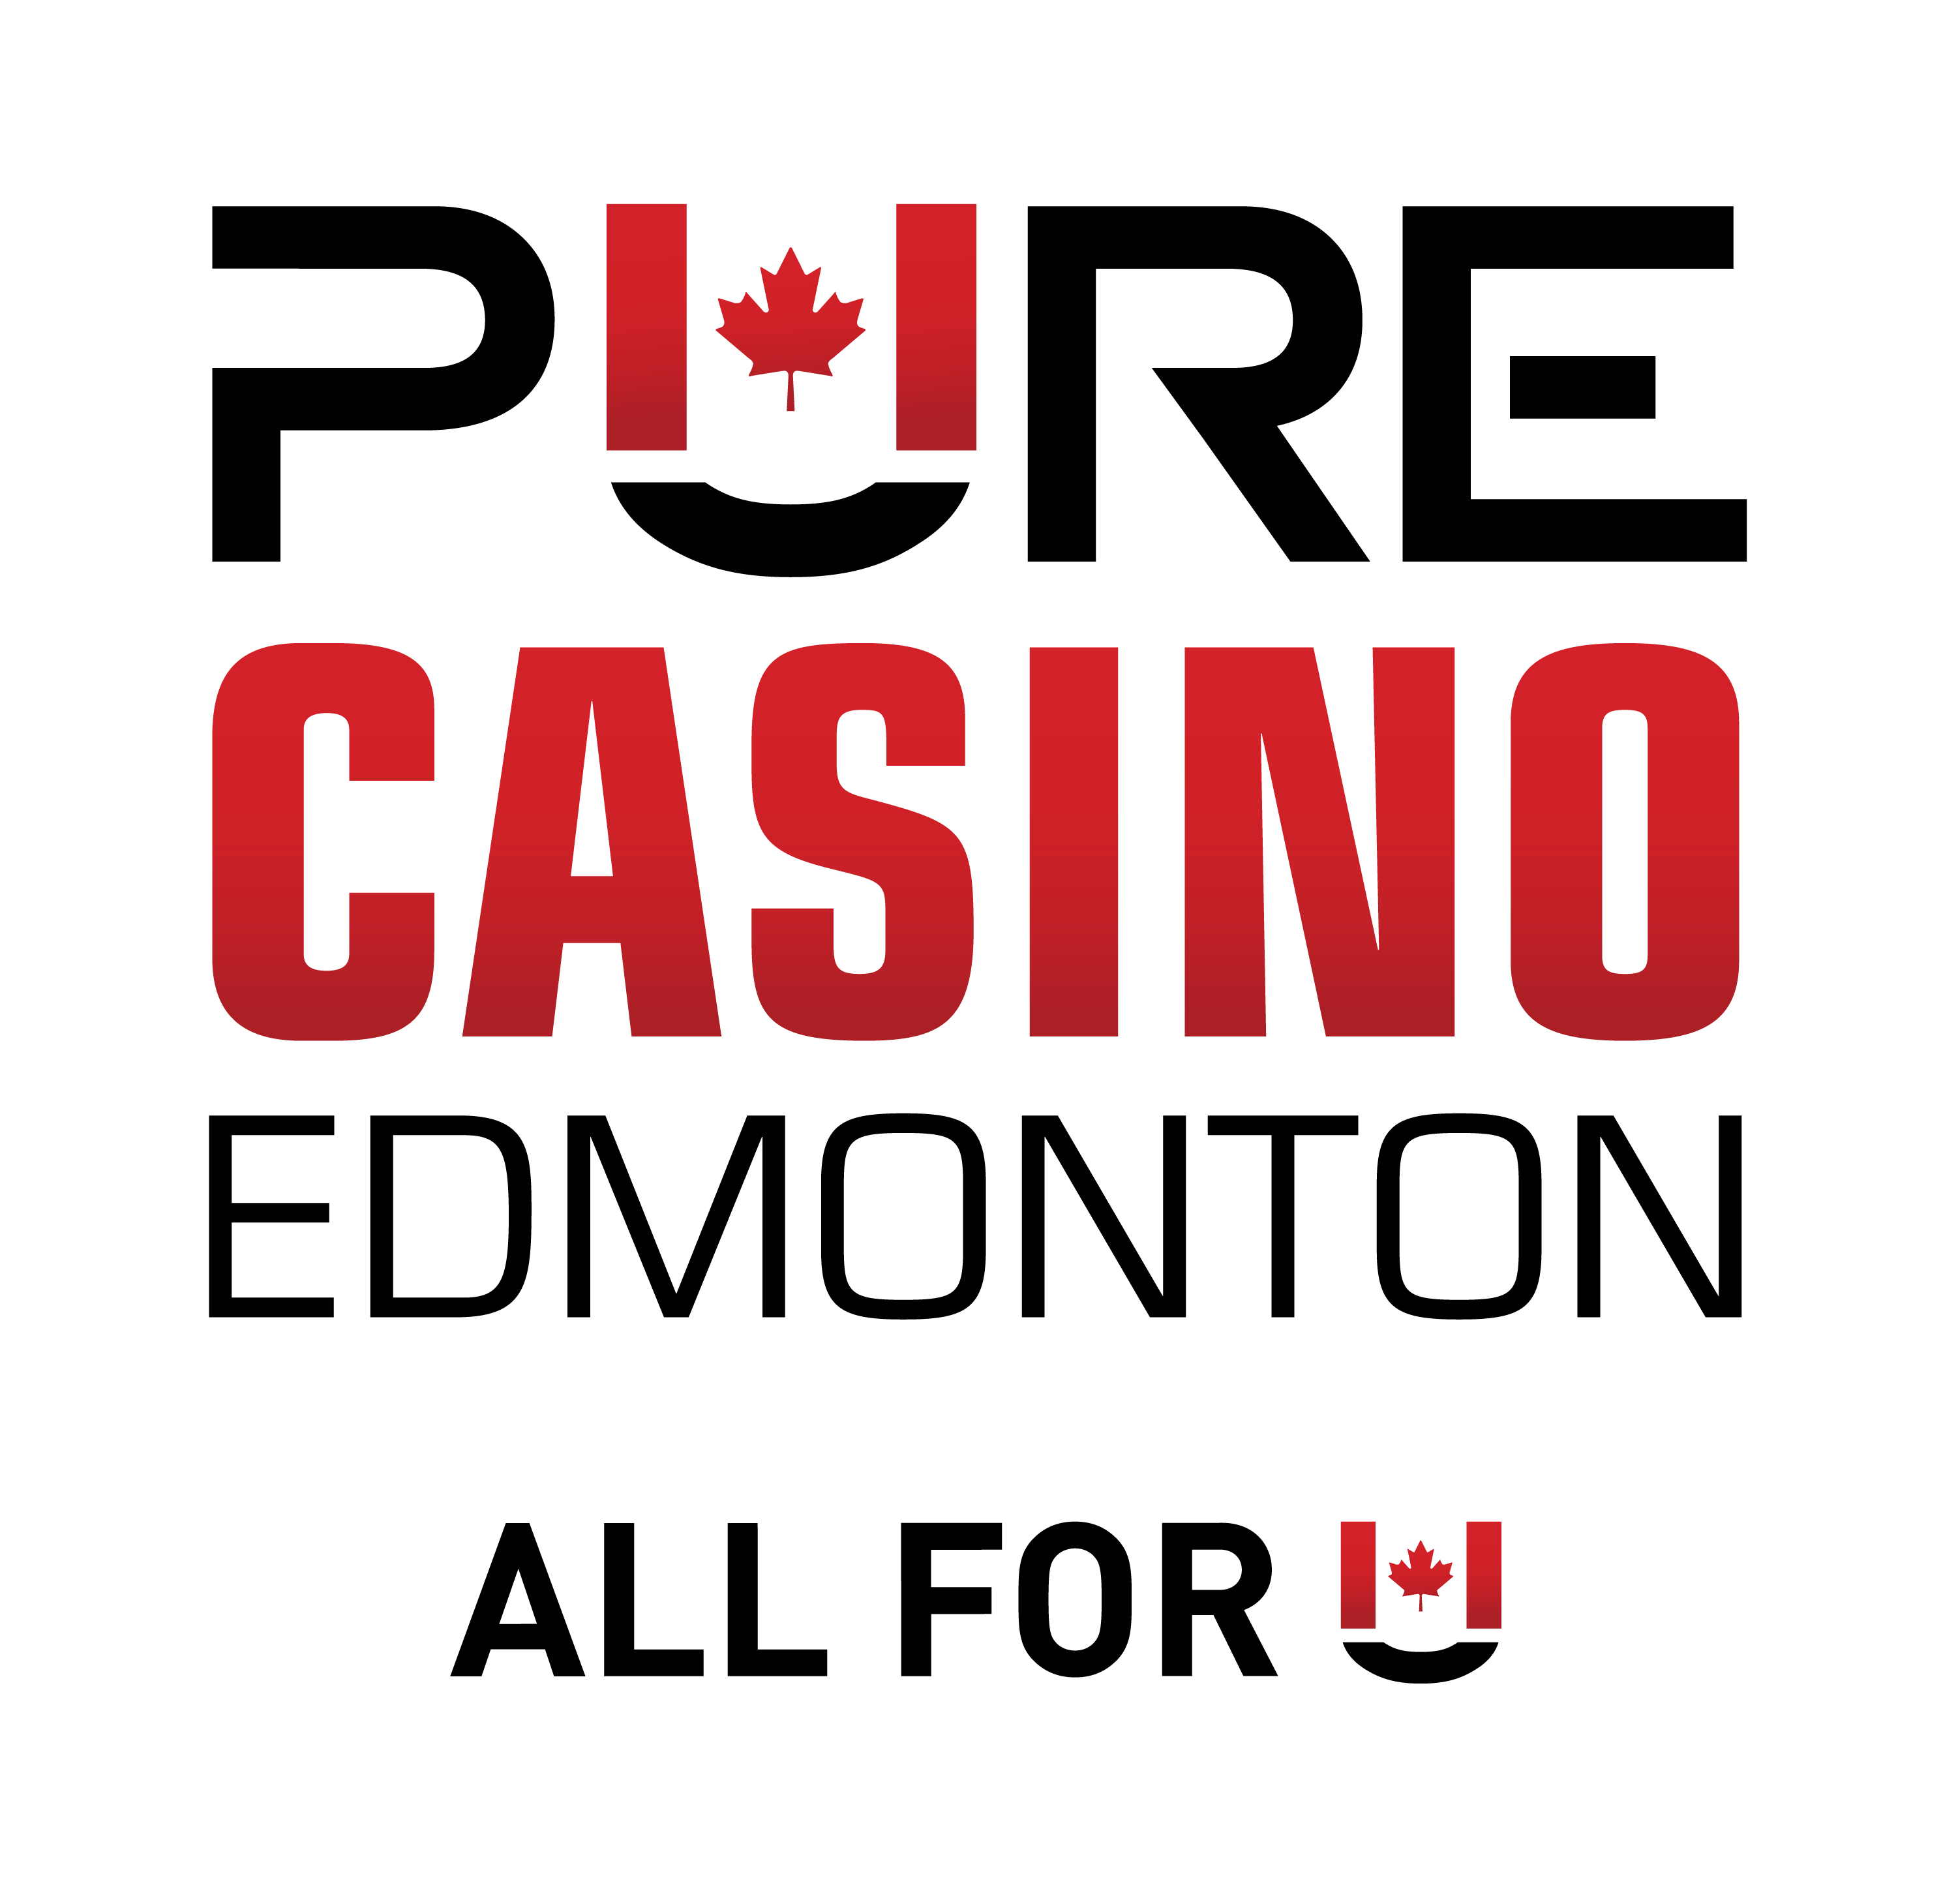 Pure Casino Edmonton logo